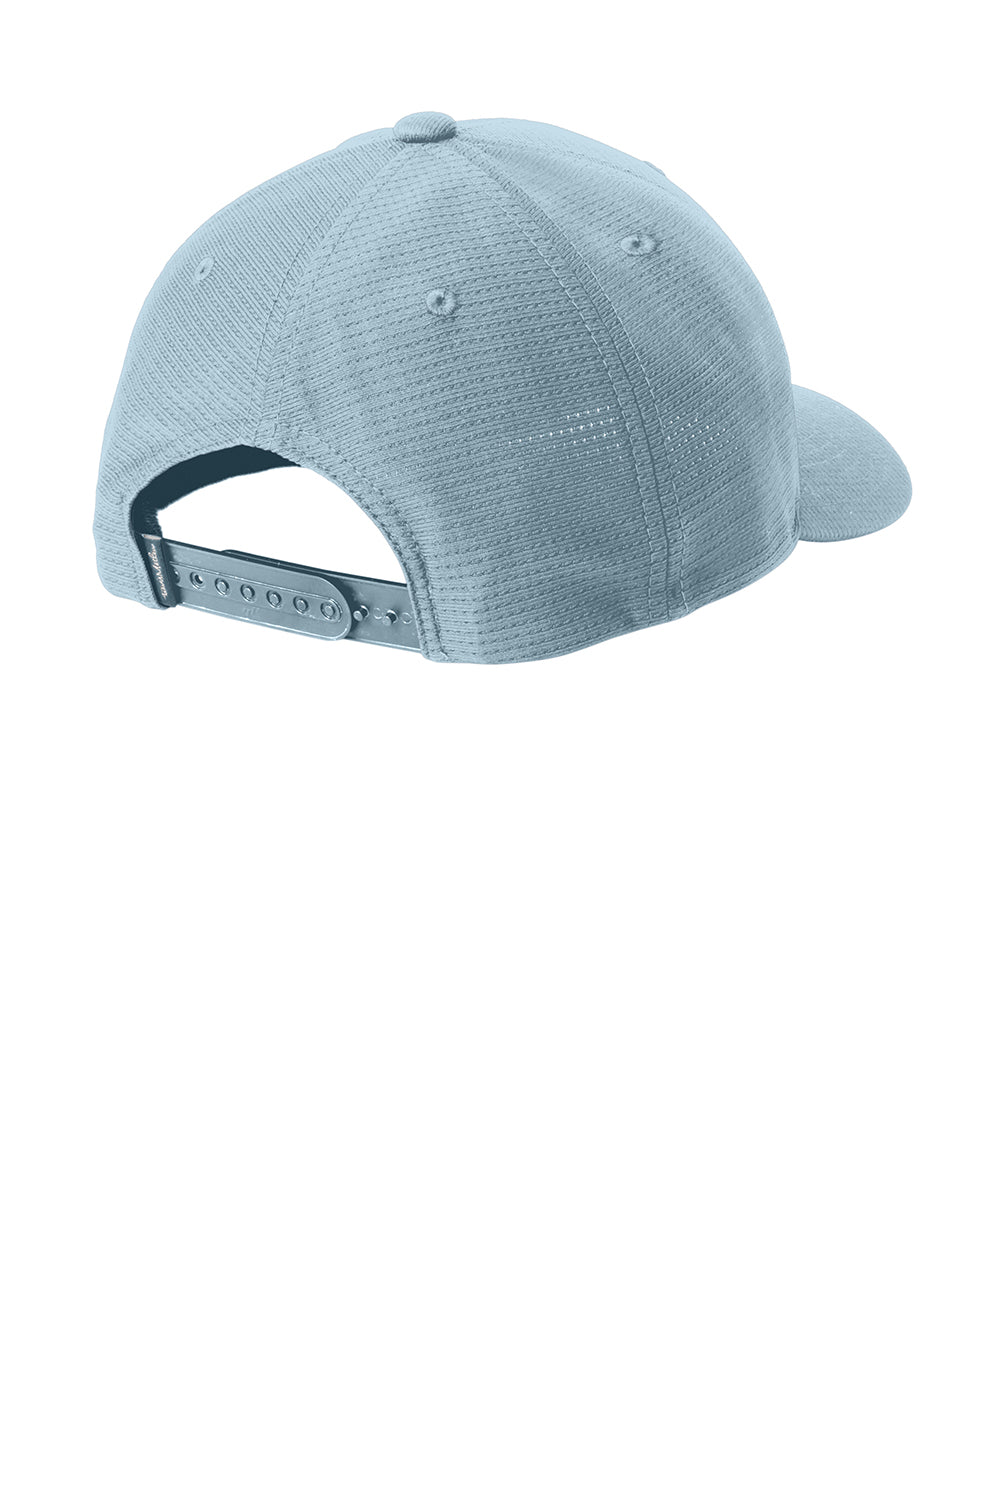 TravisMathew TM1MZ335  Front Icon Snapback Hat Allure Blue Flat Back